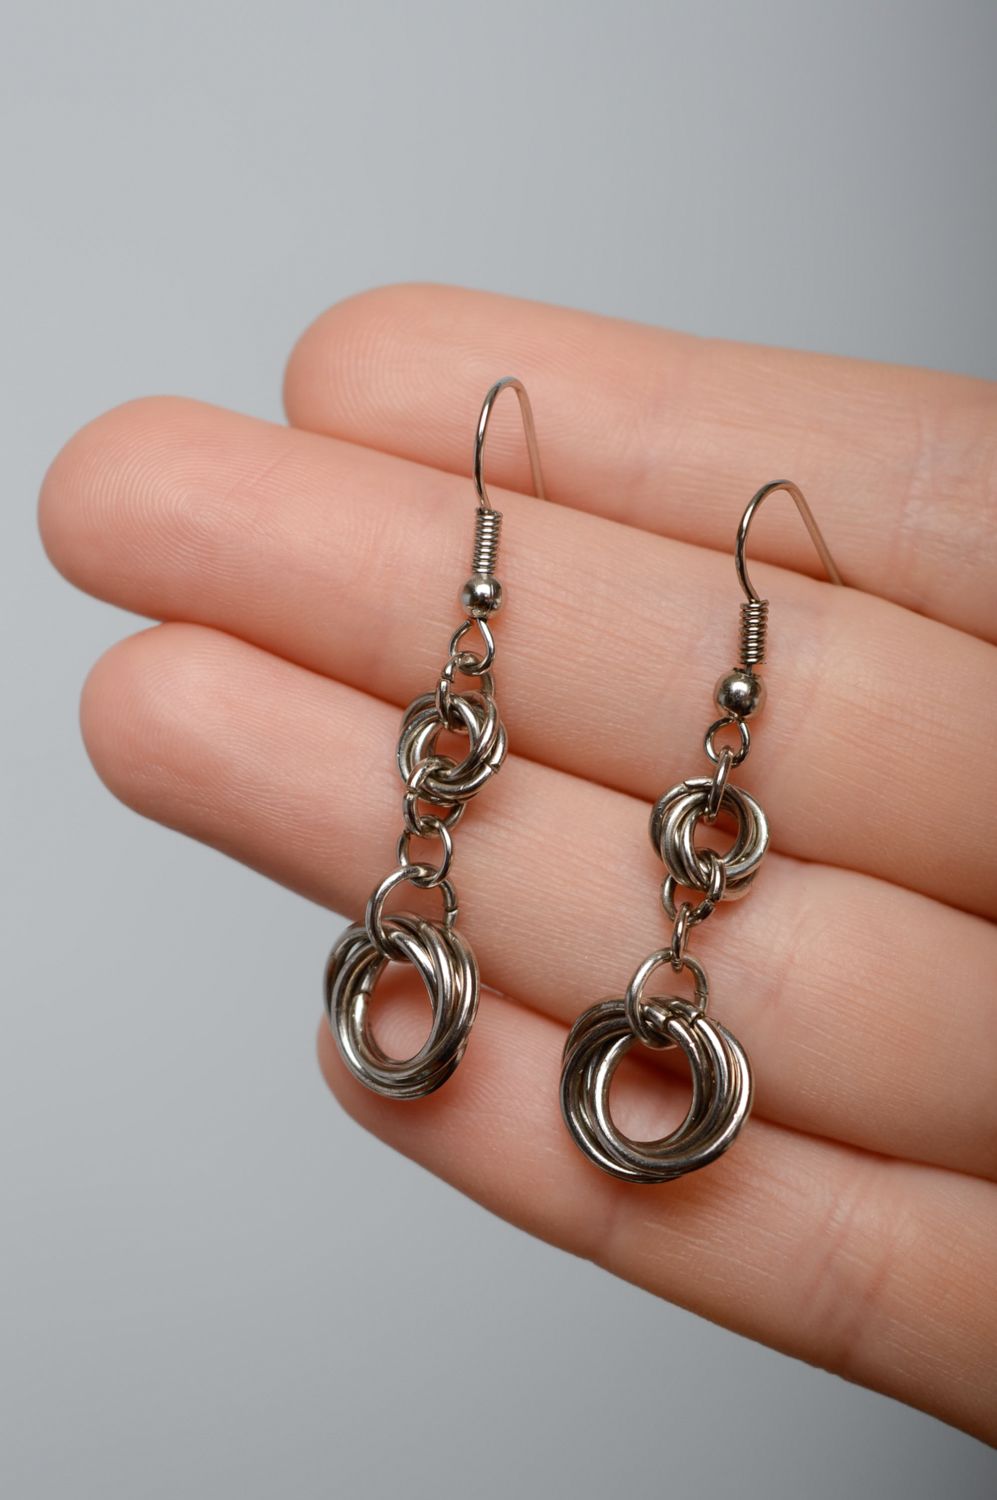 Handmade metal earrings created using chain armor weaving technique photo 3